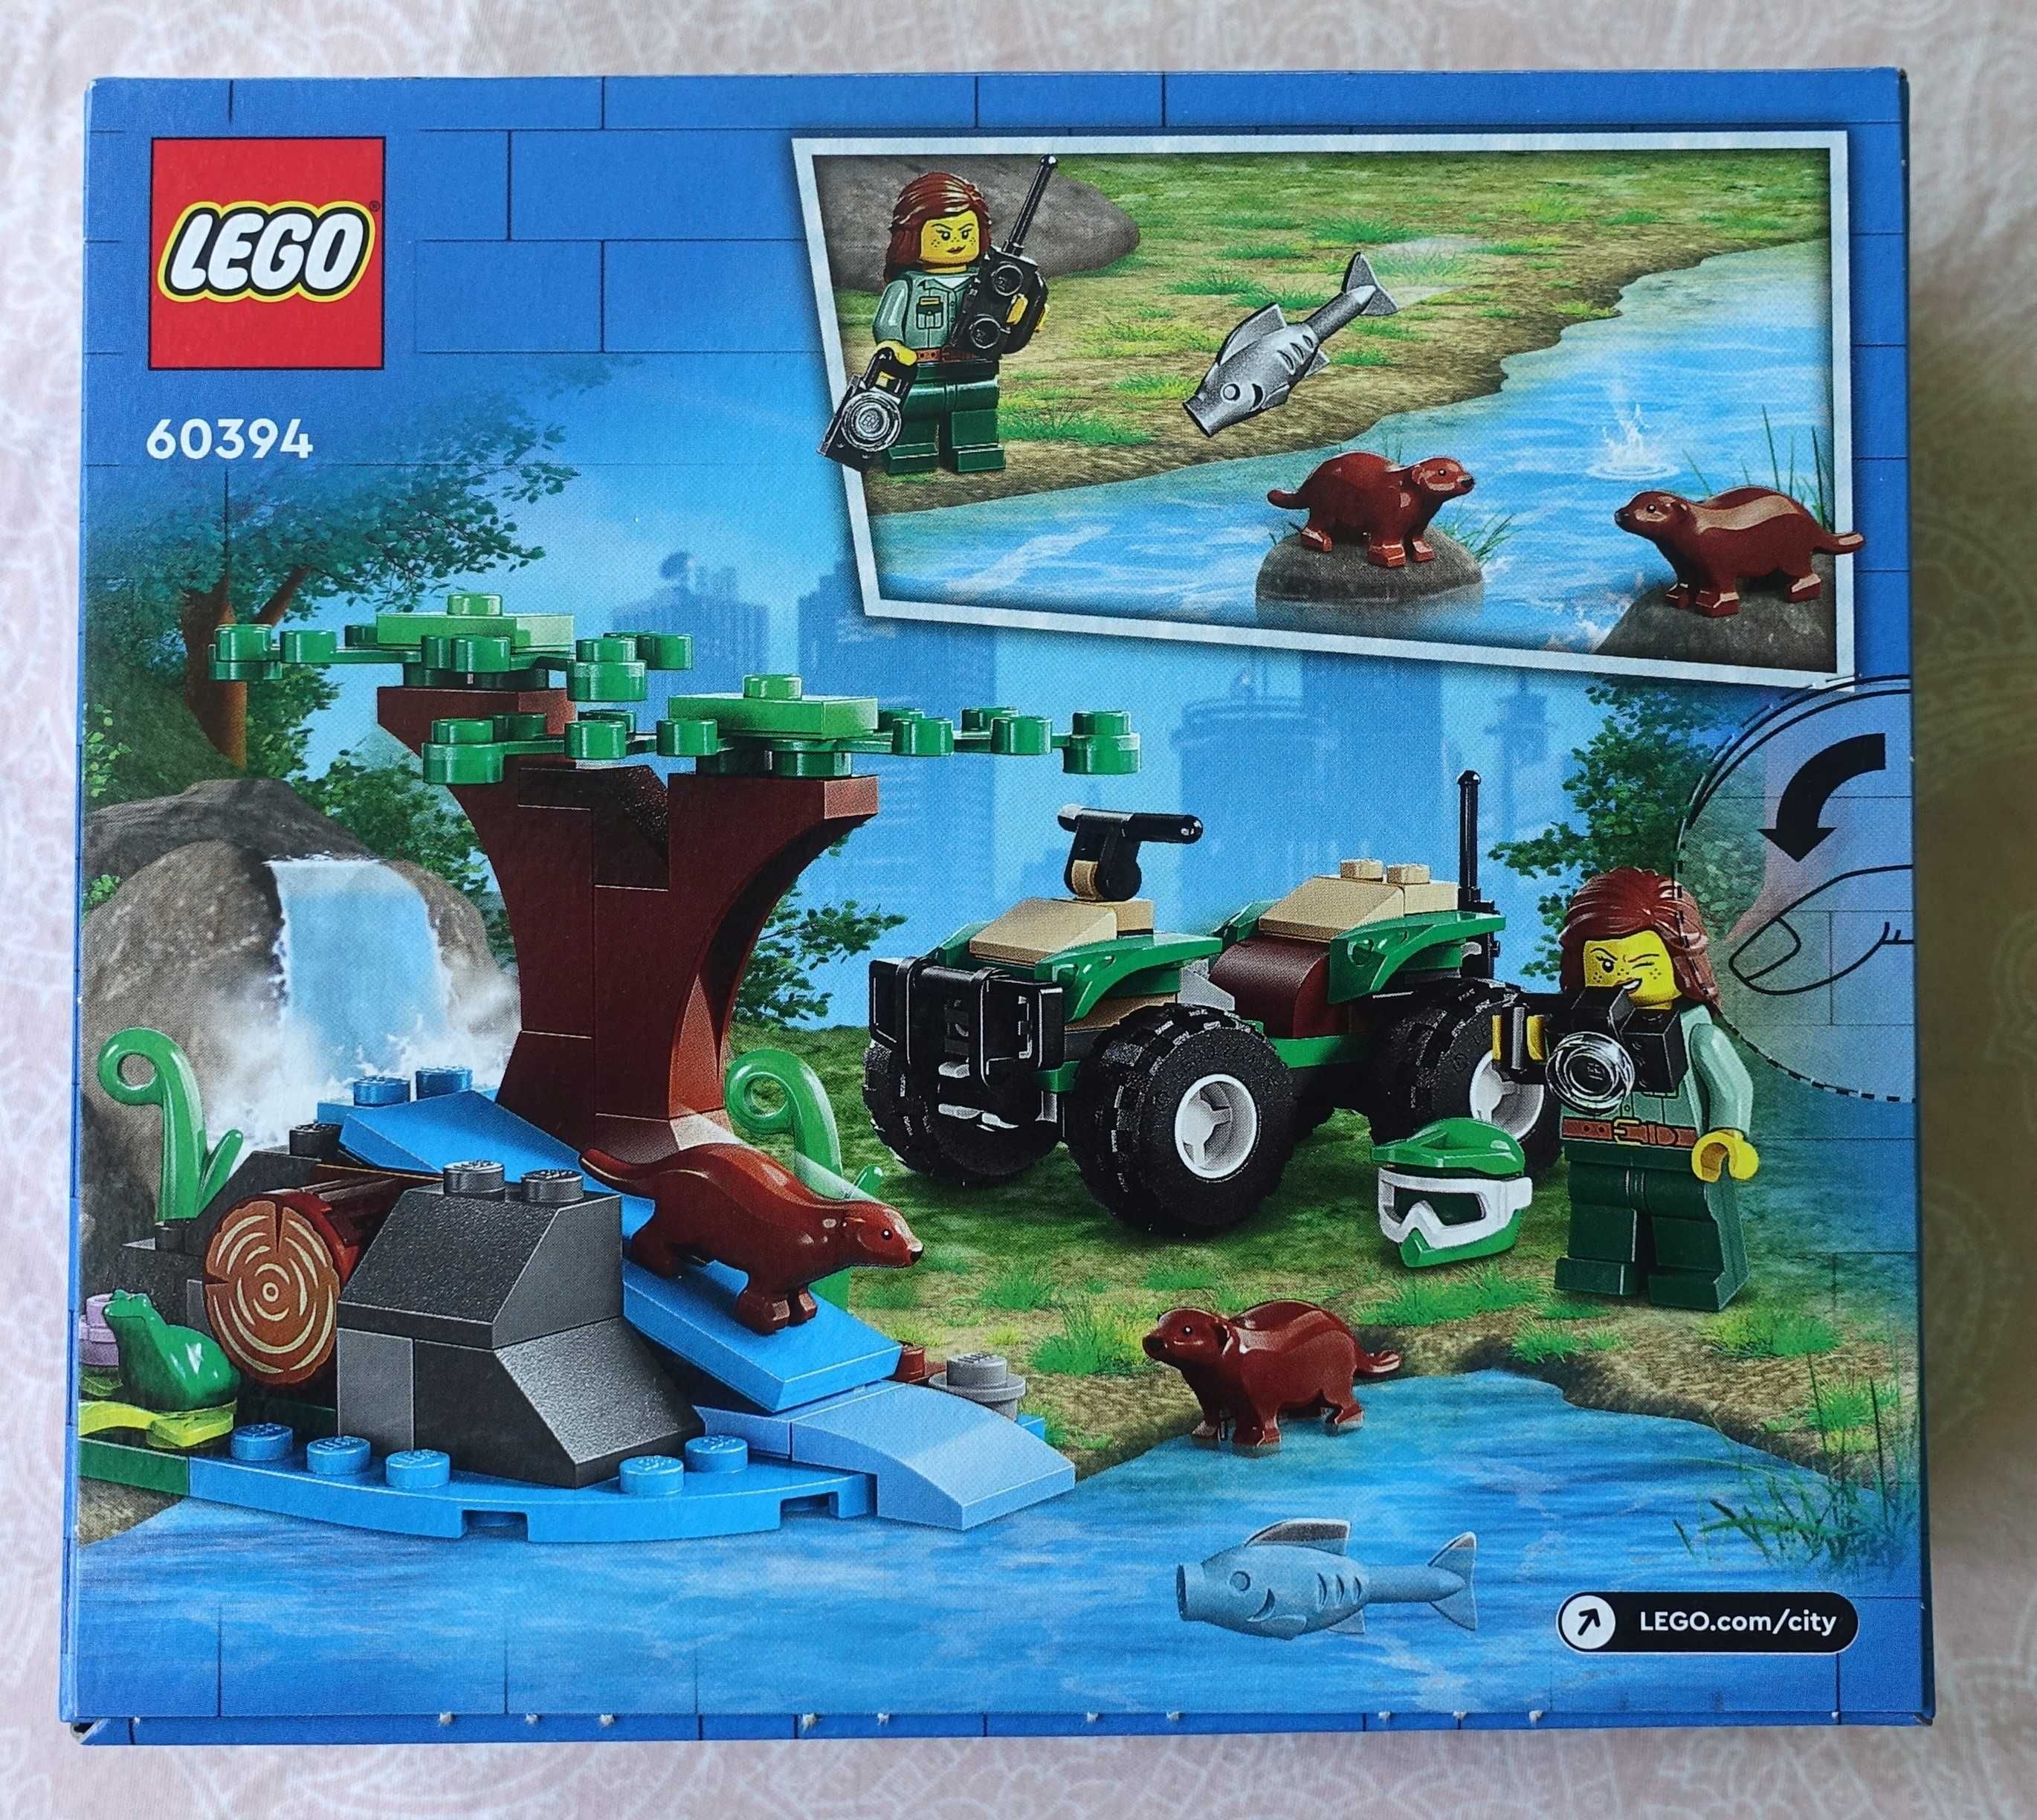 LEGO City 60394 - Quad i siedlisko wydry, NOWE!